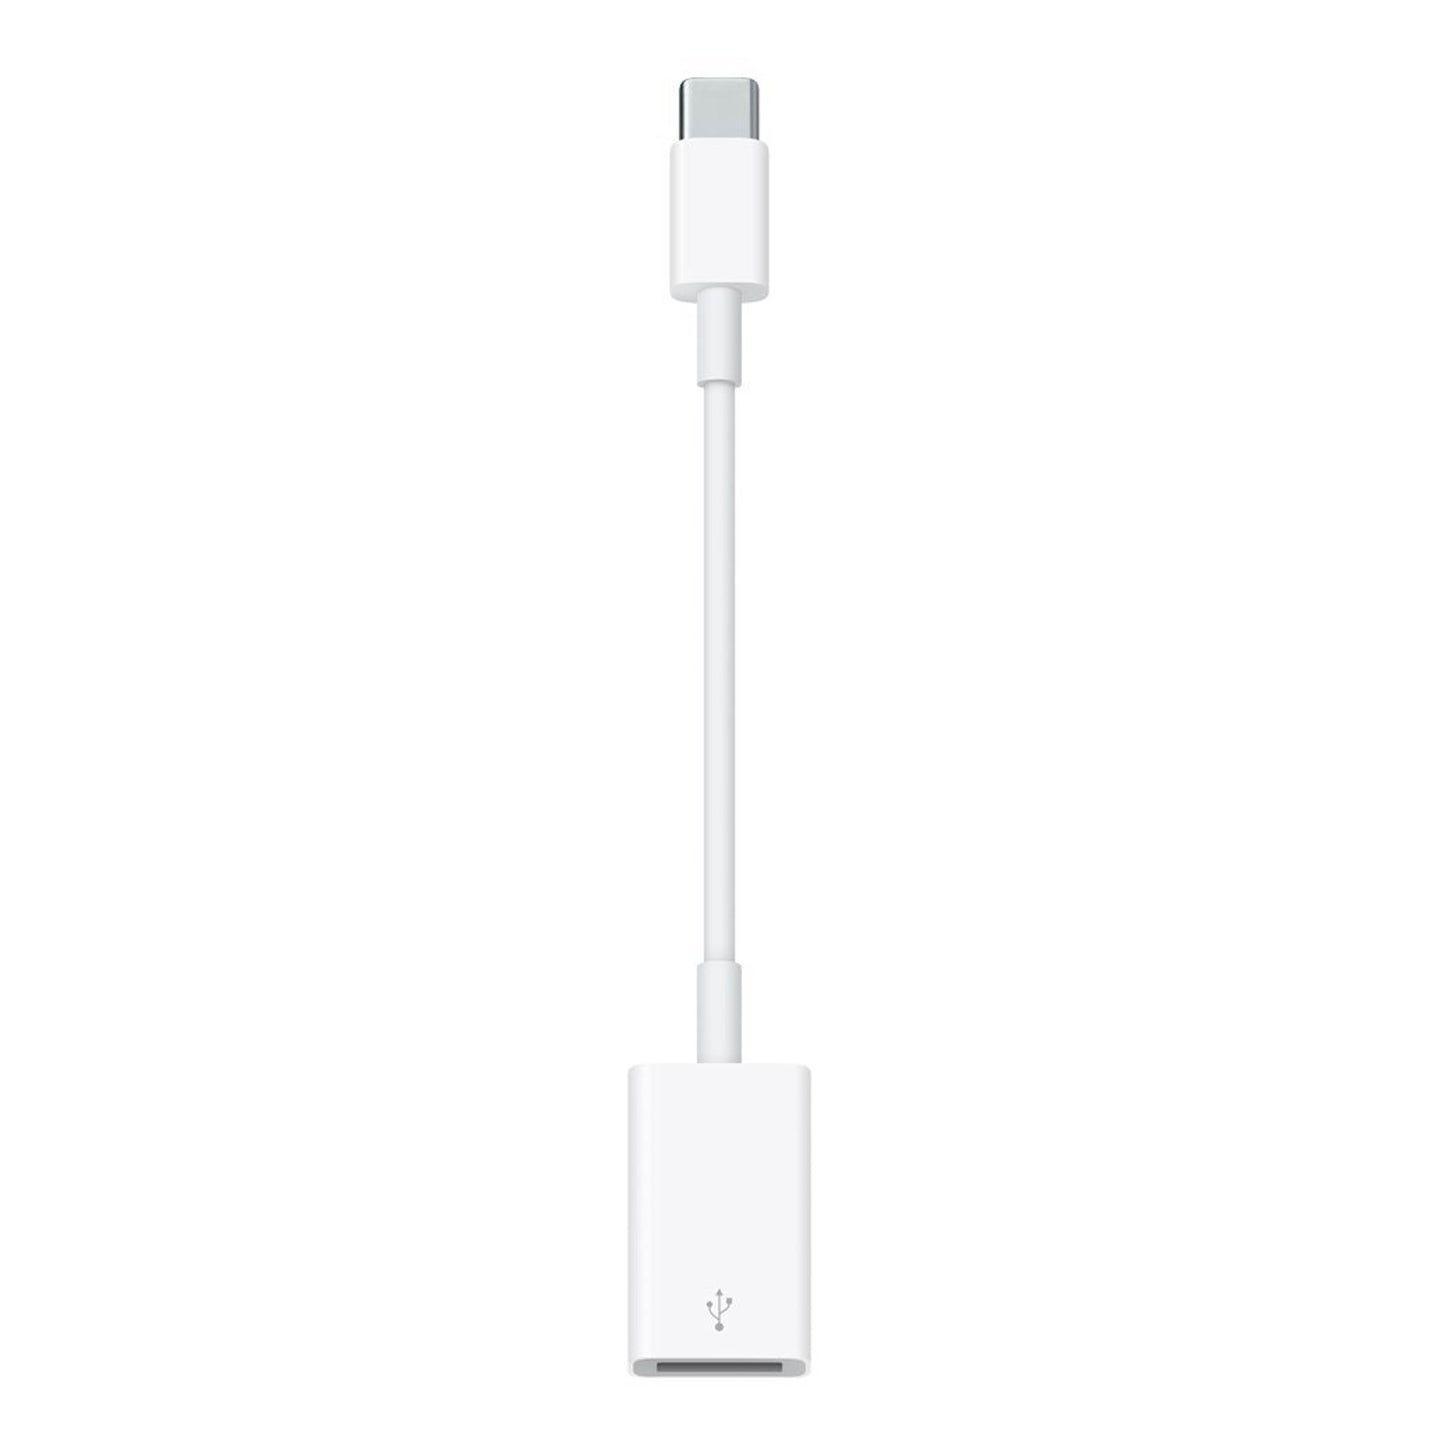 Apple USB 3.1 Gen 1 Type-C Male to USB Type-A Female Adapter